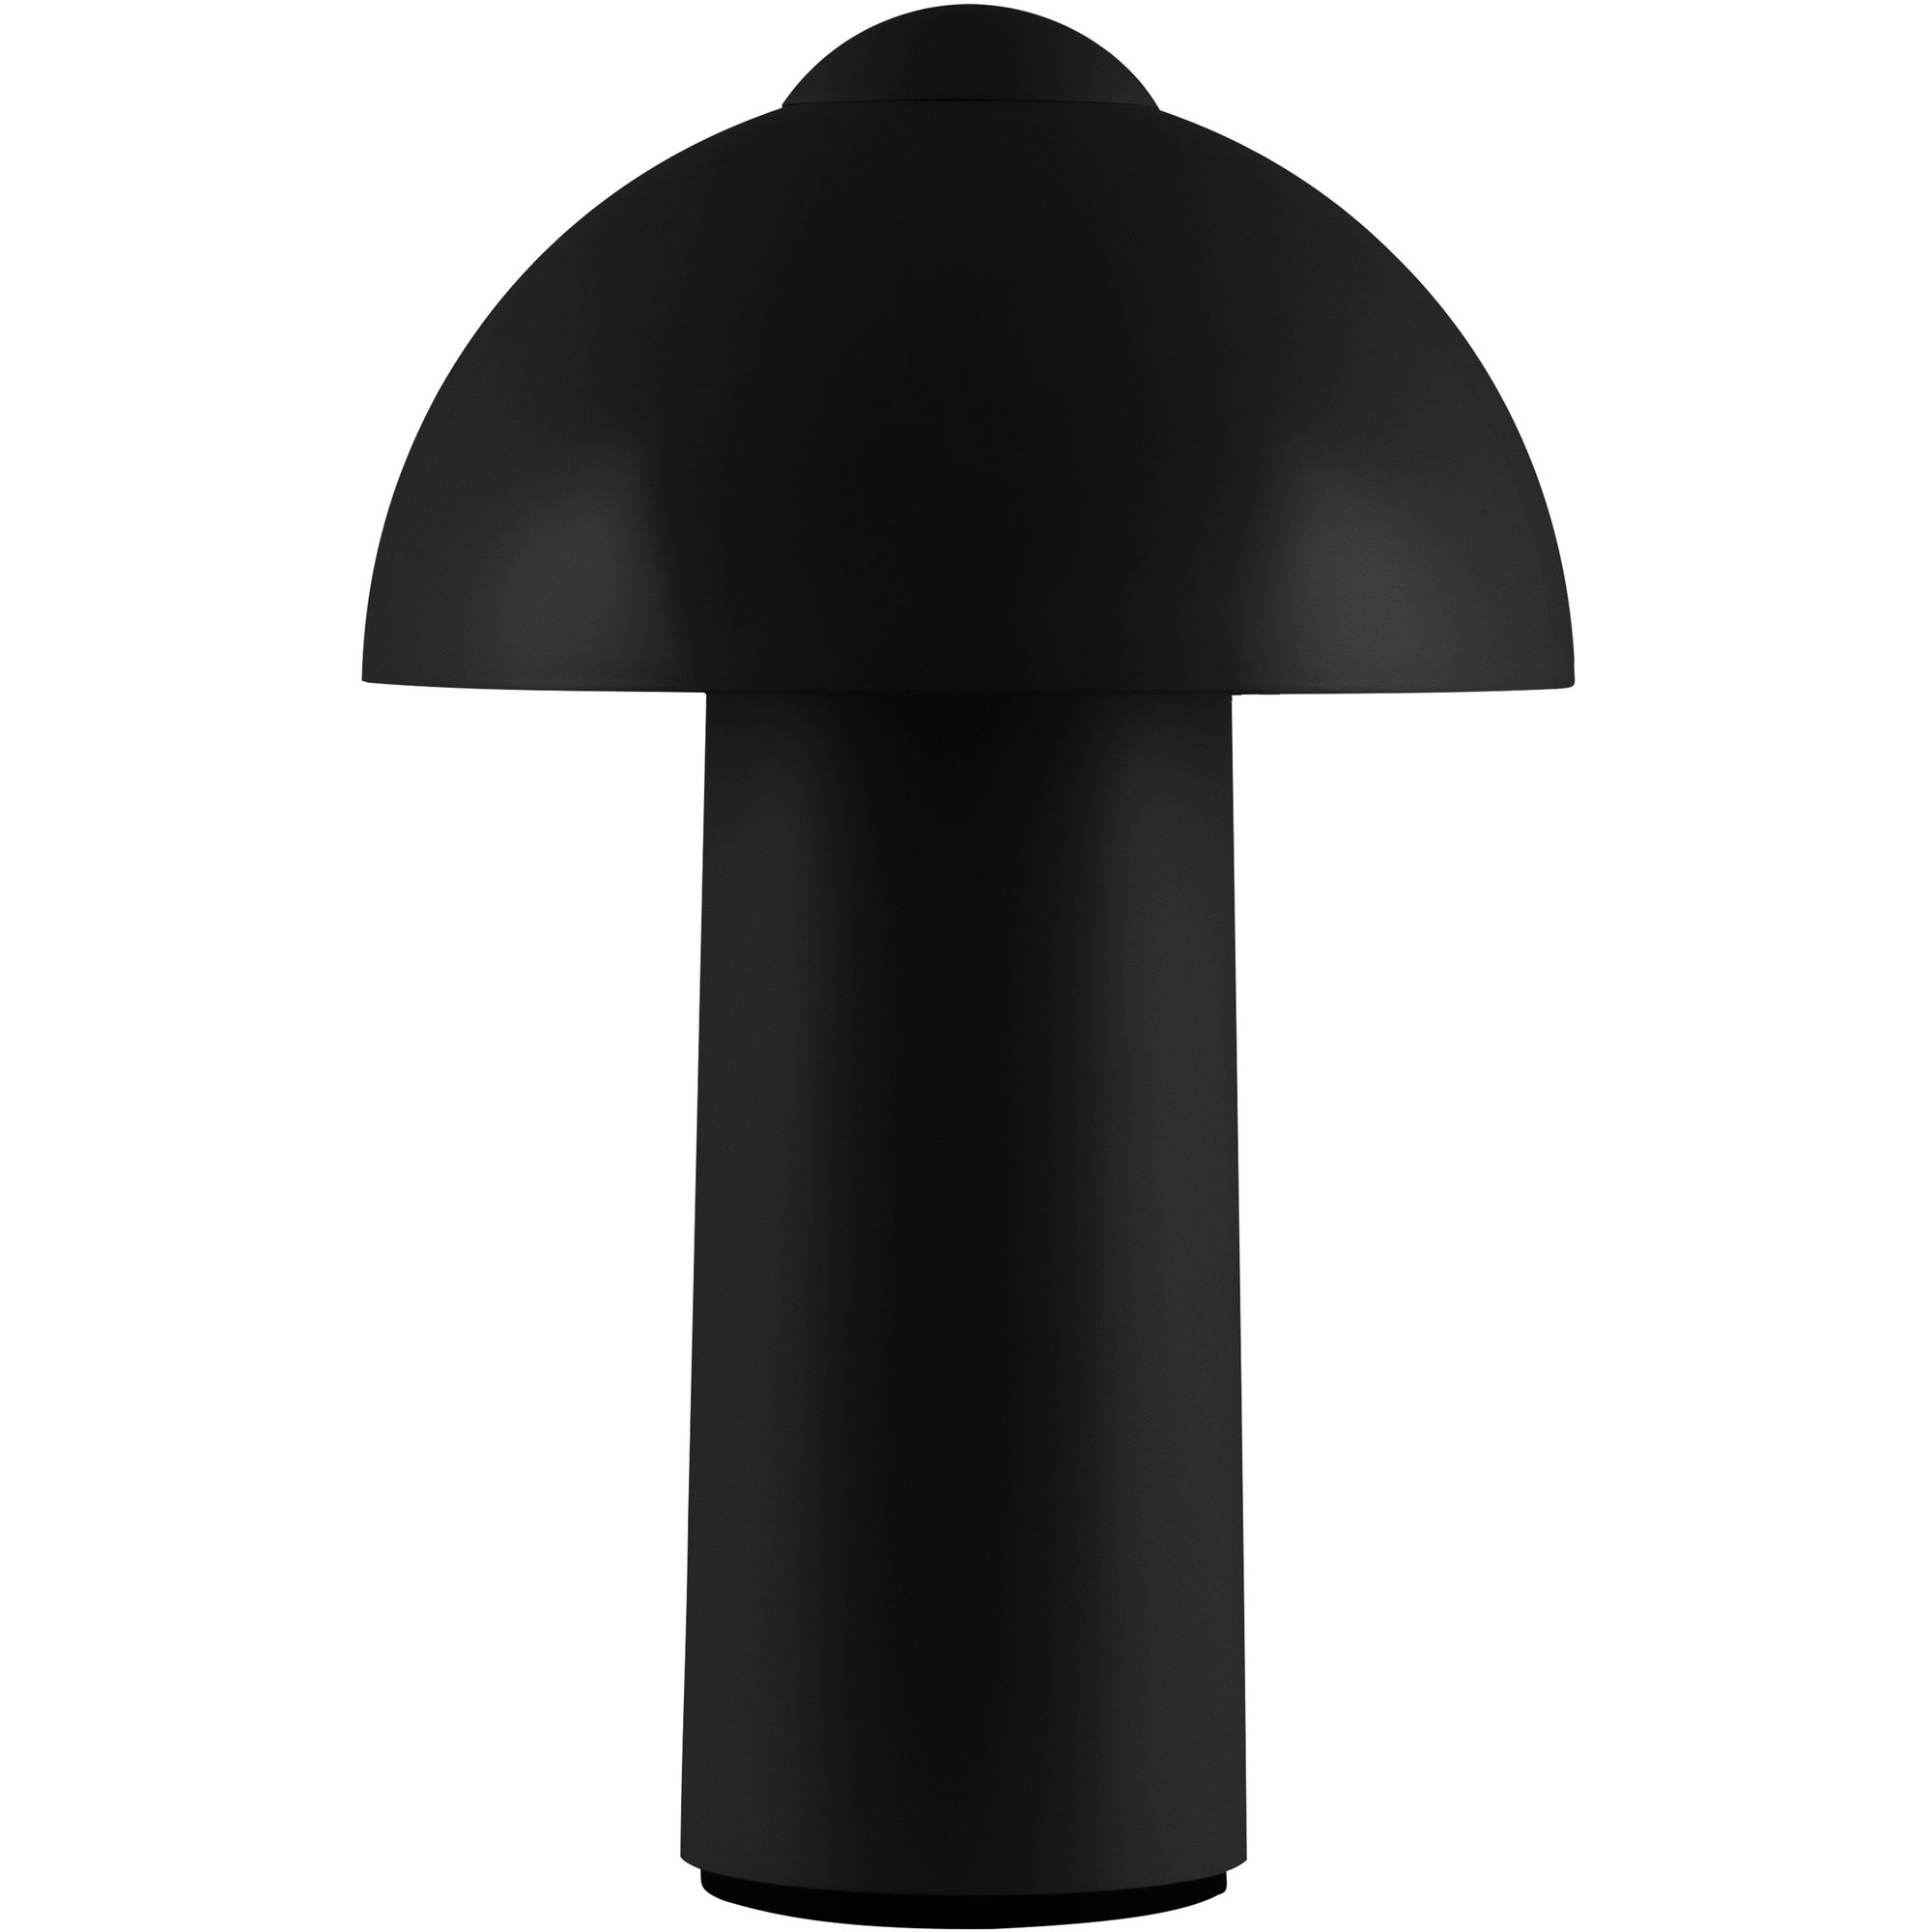 Globen Lighting Buddy IP44 bærbar bordlampe, svart Lampe